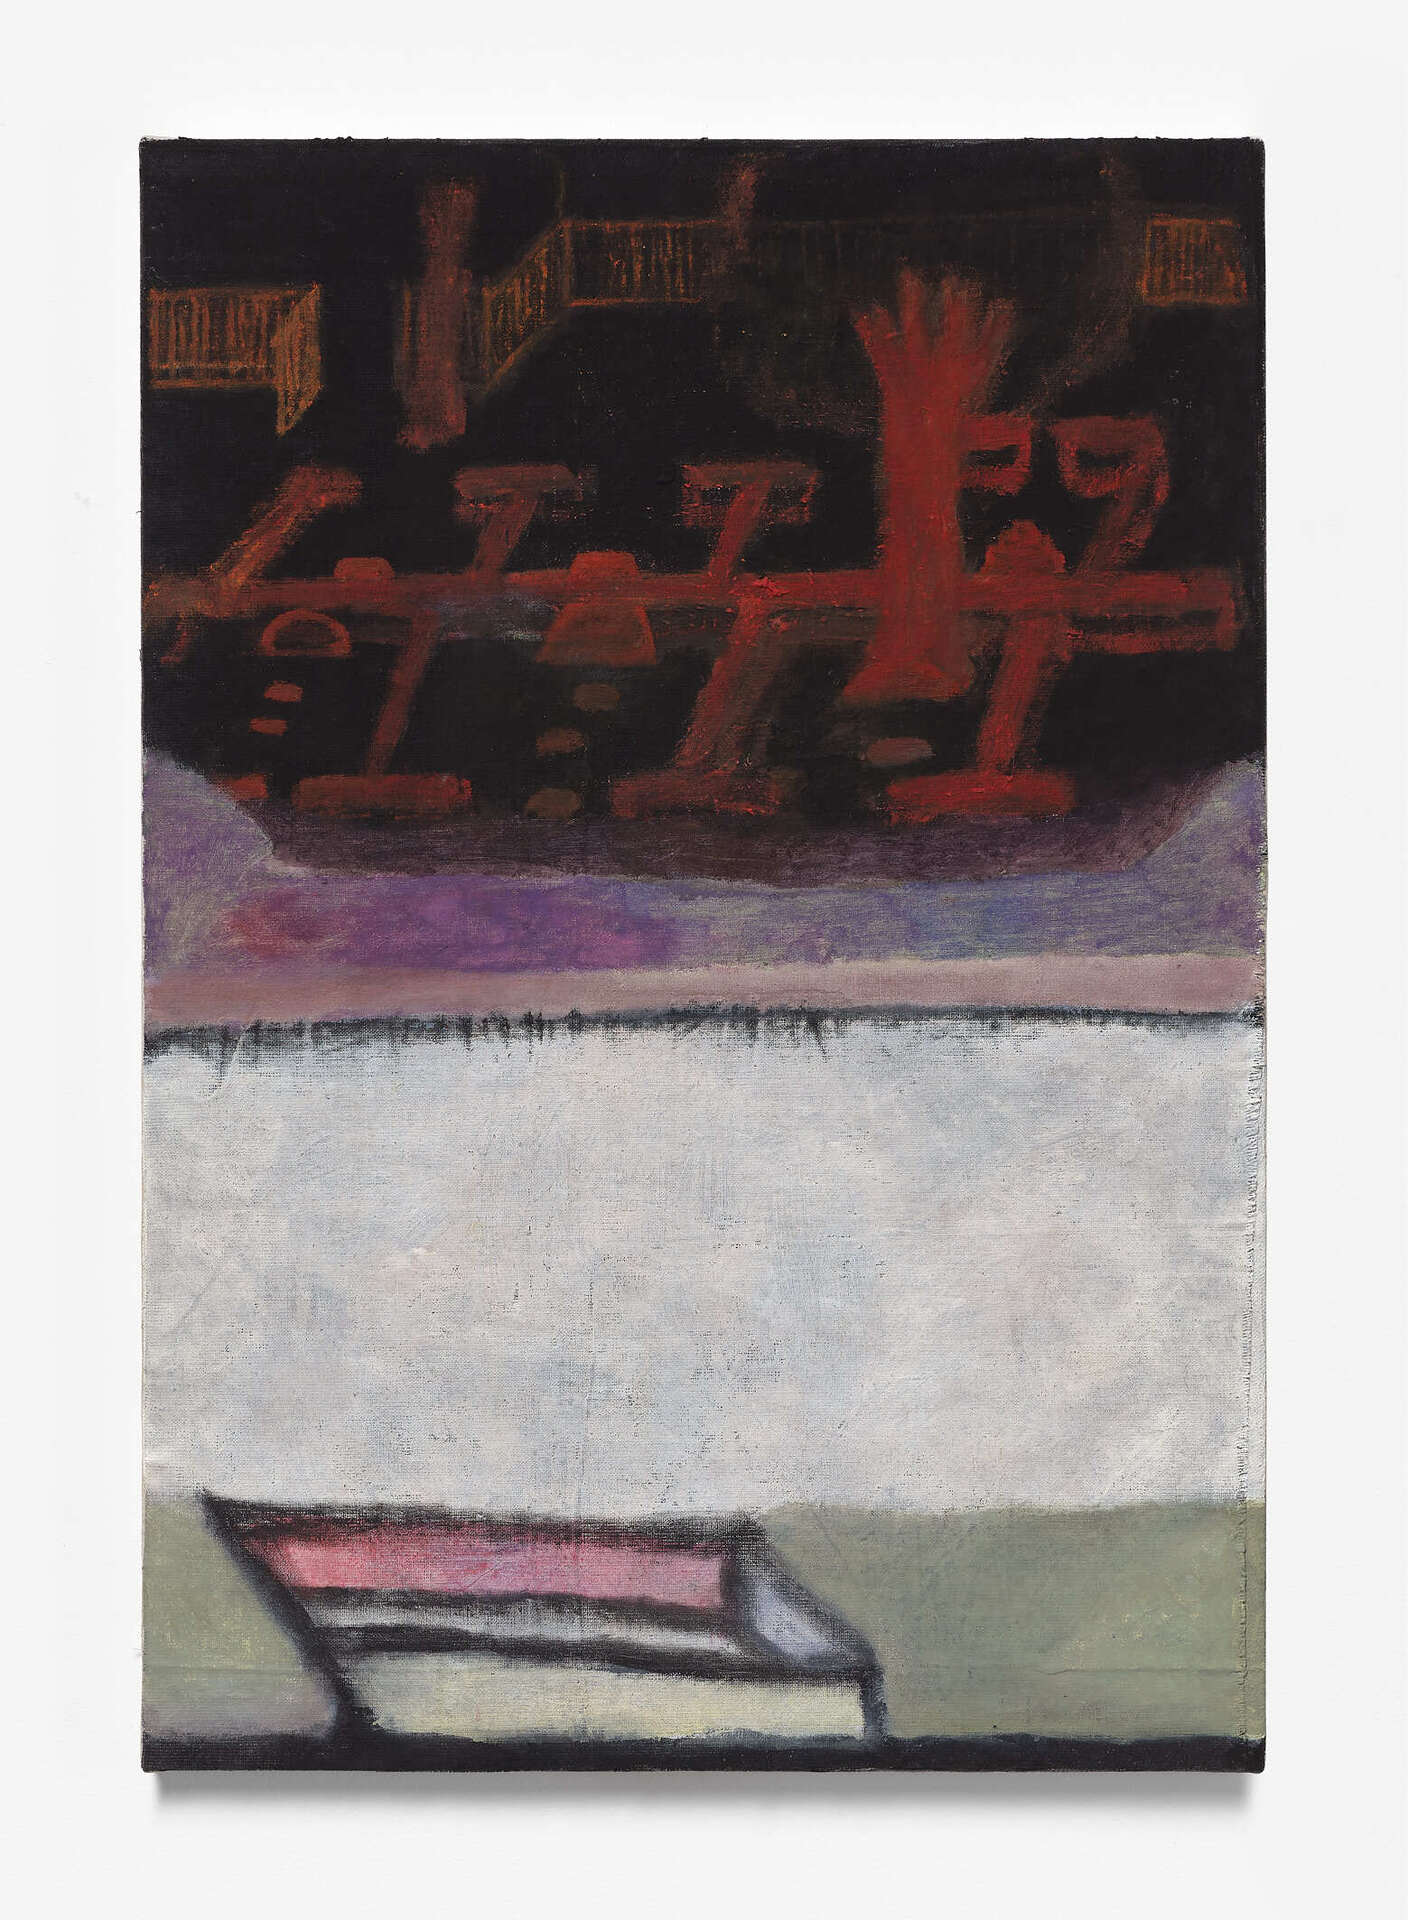 Allan Rand, B. B. (unmarked), 2021, Gesso, oil, linen, on cotton canvas, 48.4 x 70.3 x 2.3 cm.